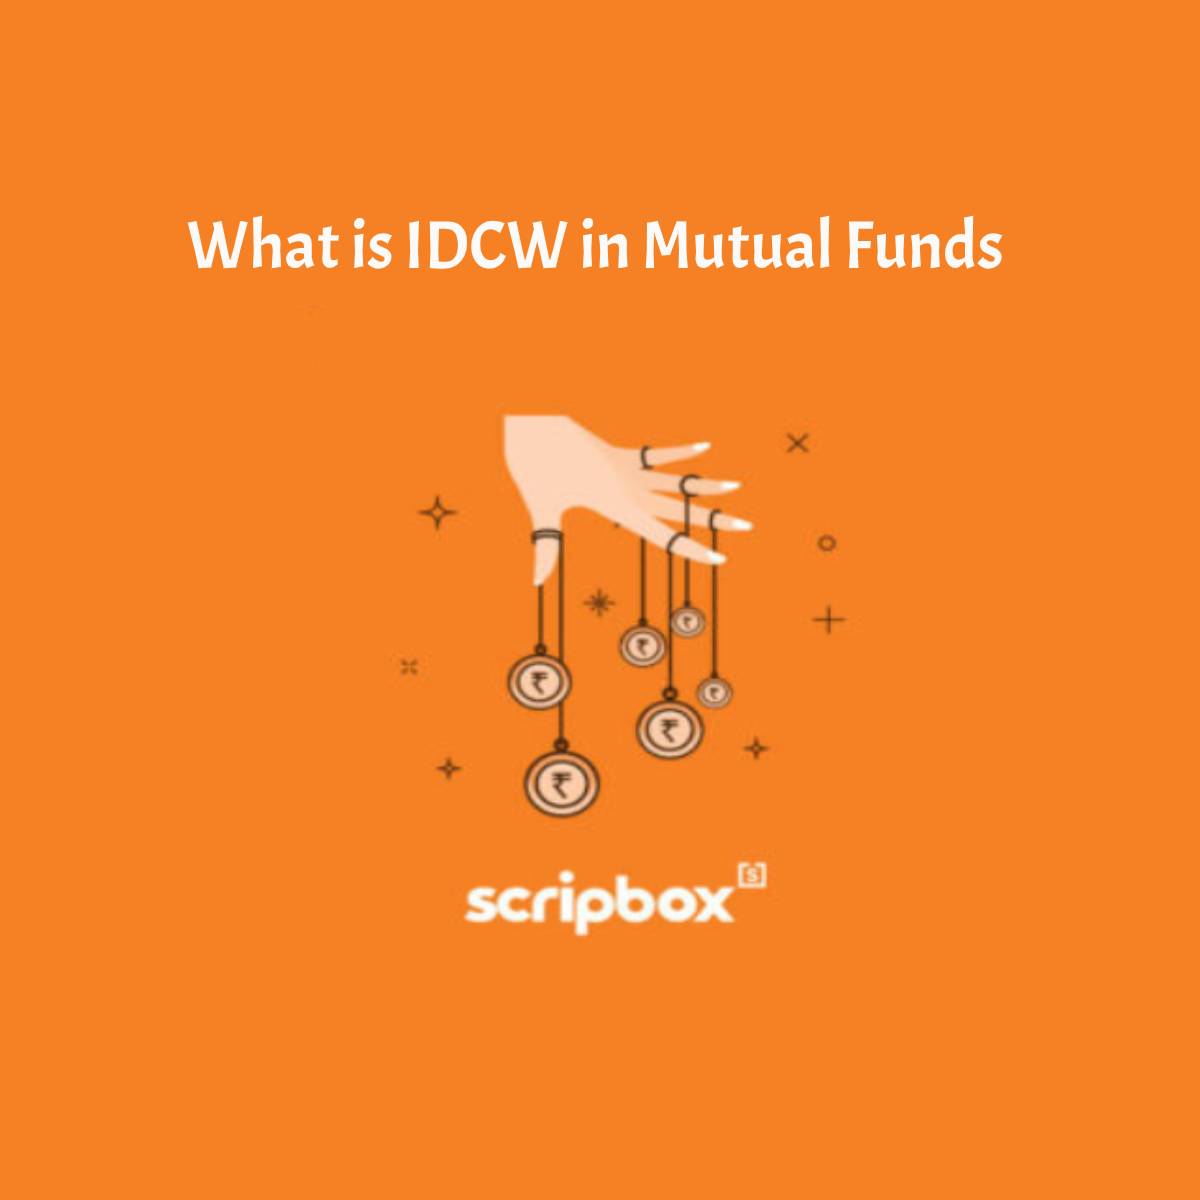 IDCW in Mutual Fund